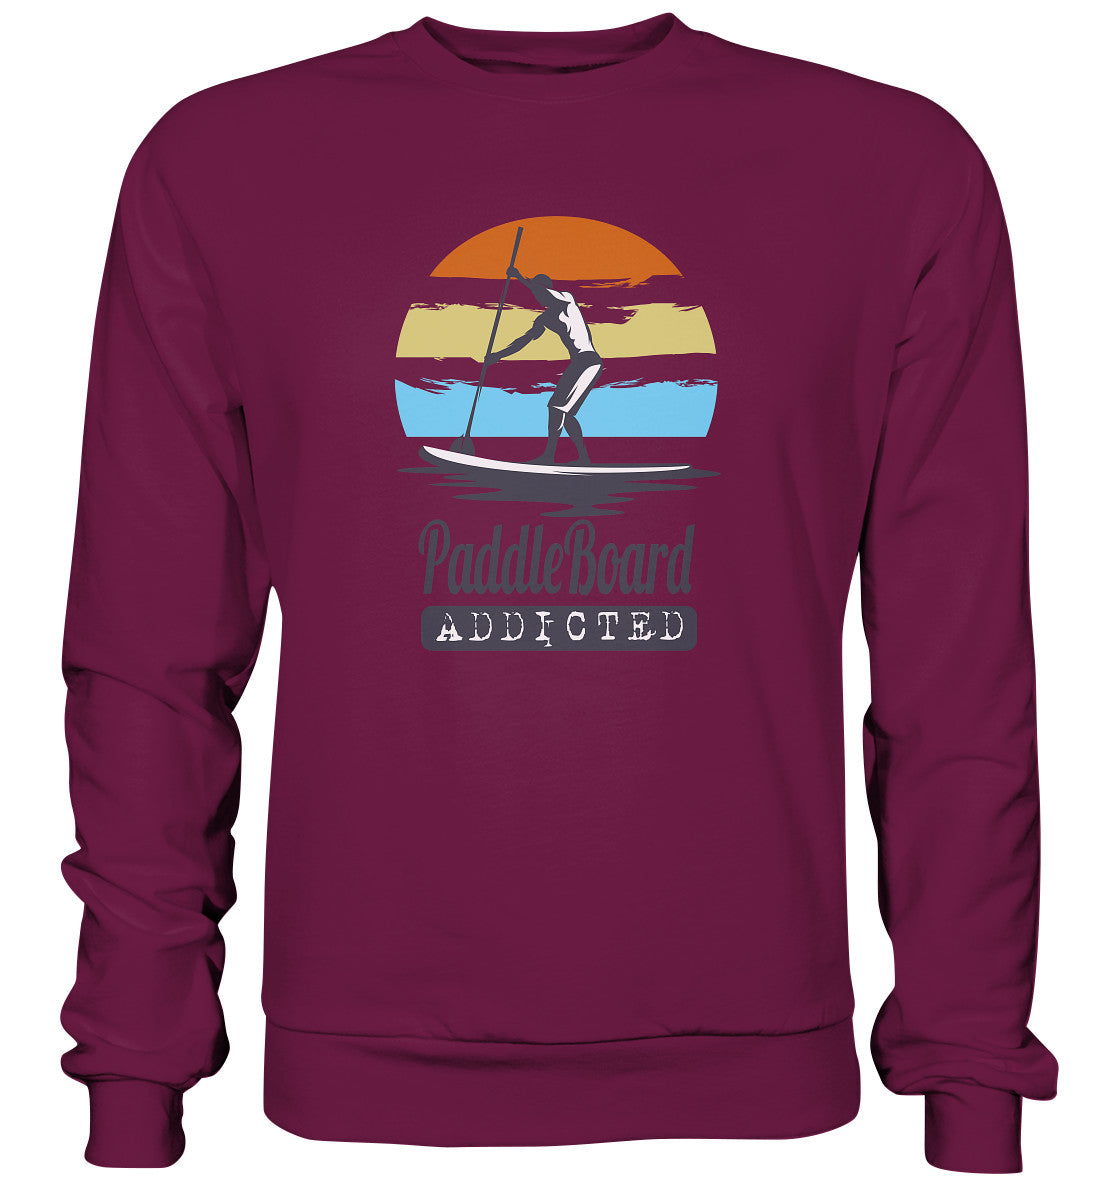 PaddleBoard Addicted - Premium Sweatshirt